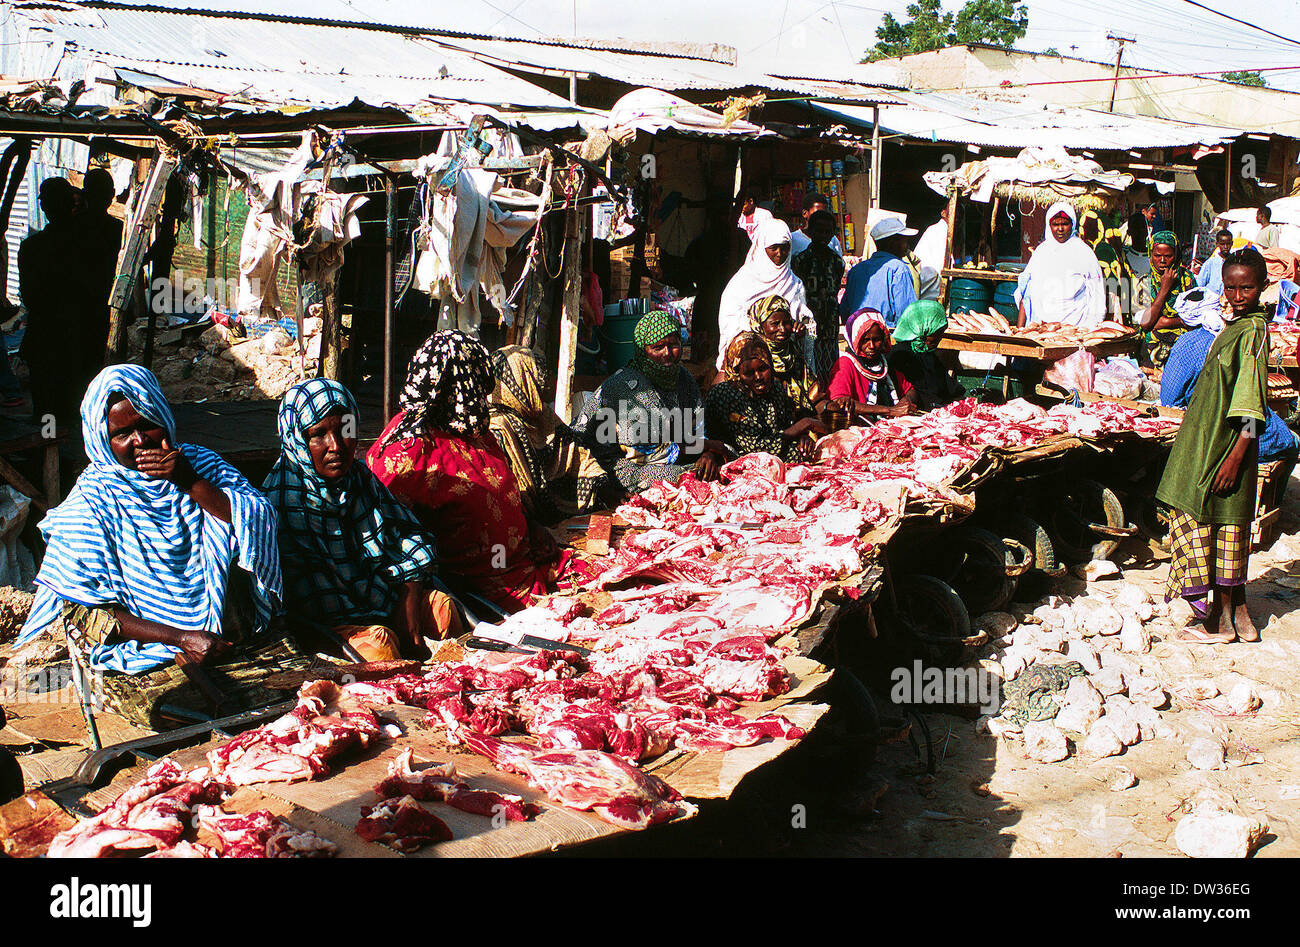 women-selling-fresh-goat-meat-at-galkayo-market-in-somalia-DW36EG.jpg